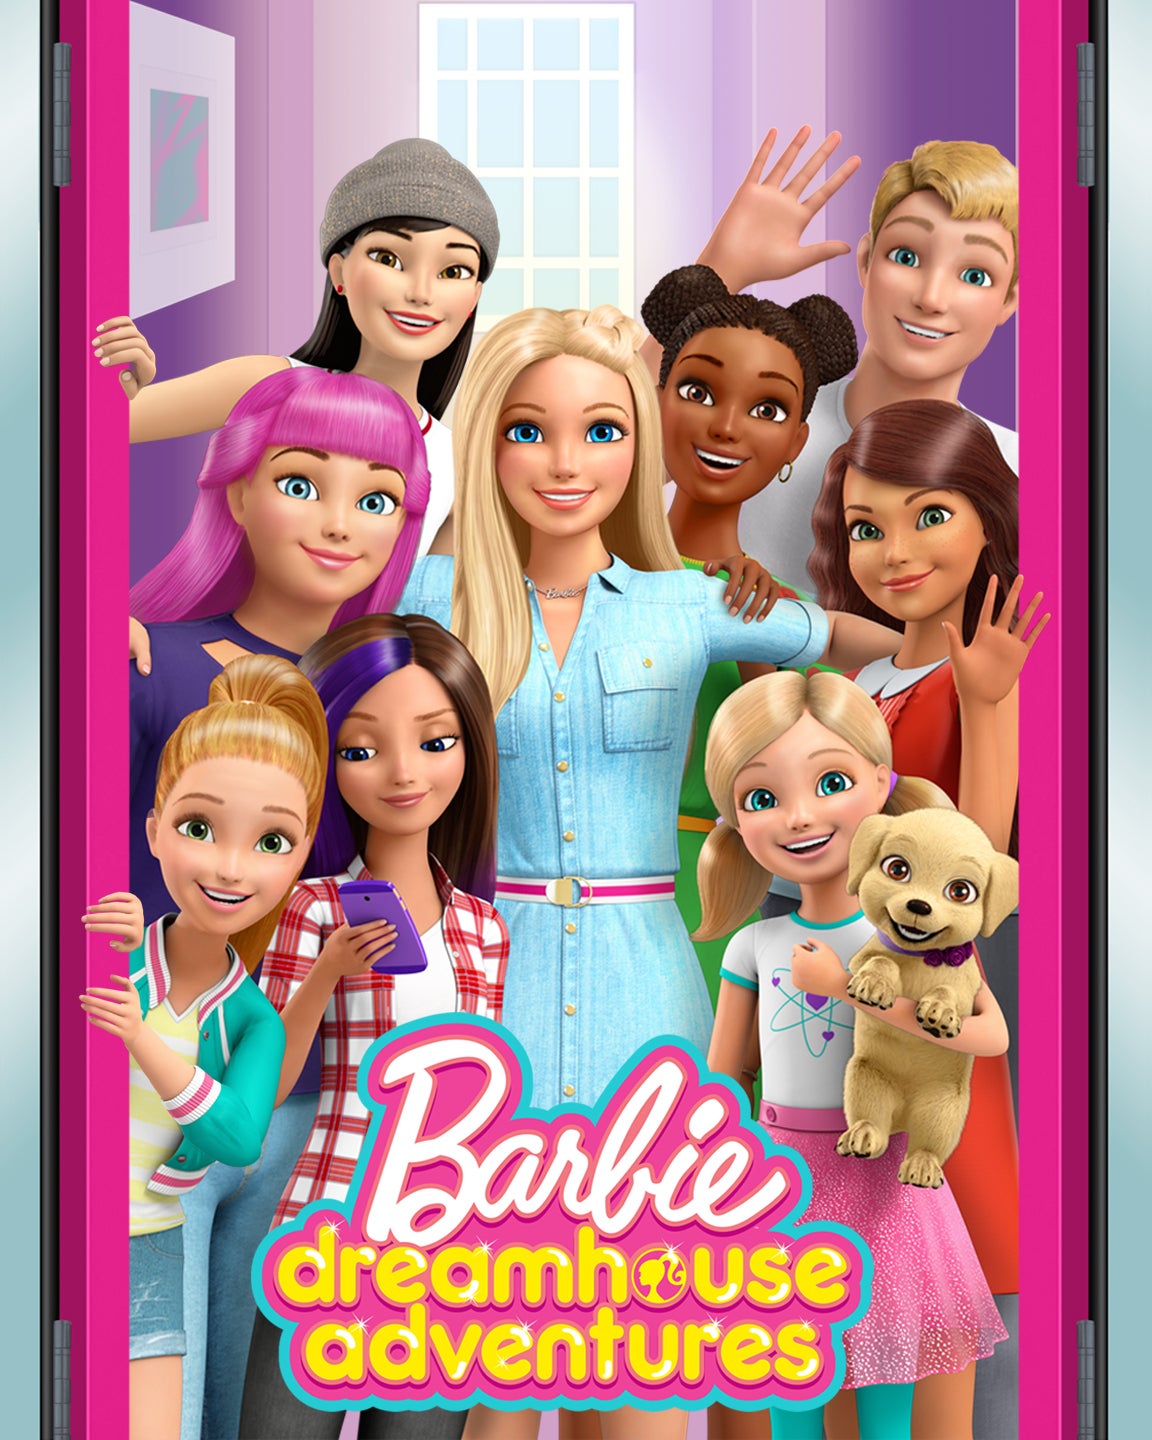 TV ratings for Barbie Dreamhouse Adventures in Spain. Netflix TV series